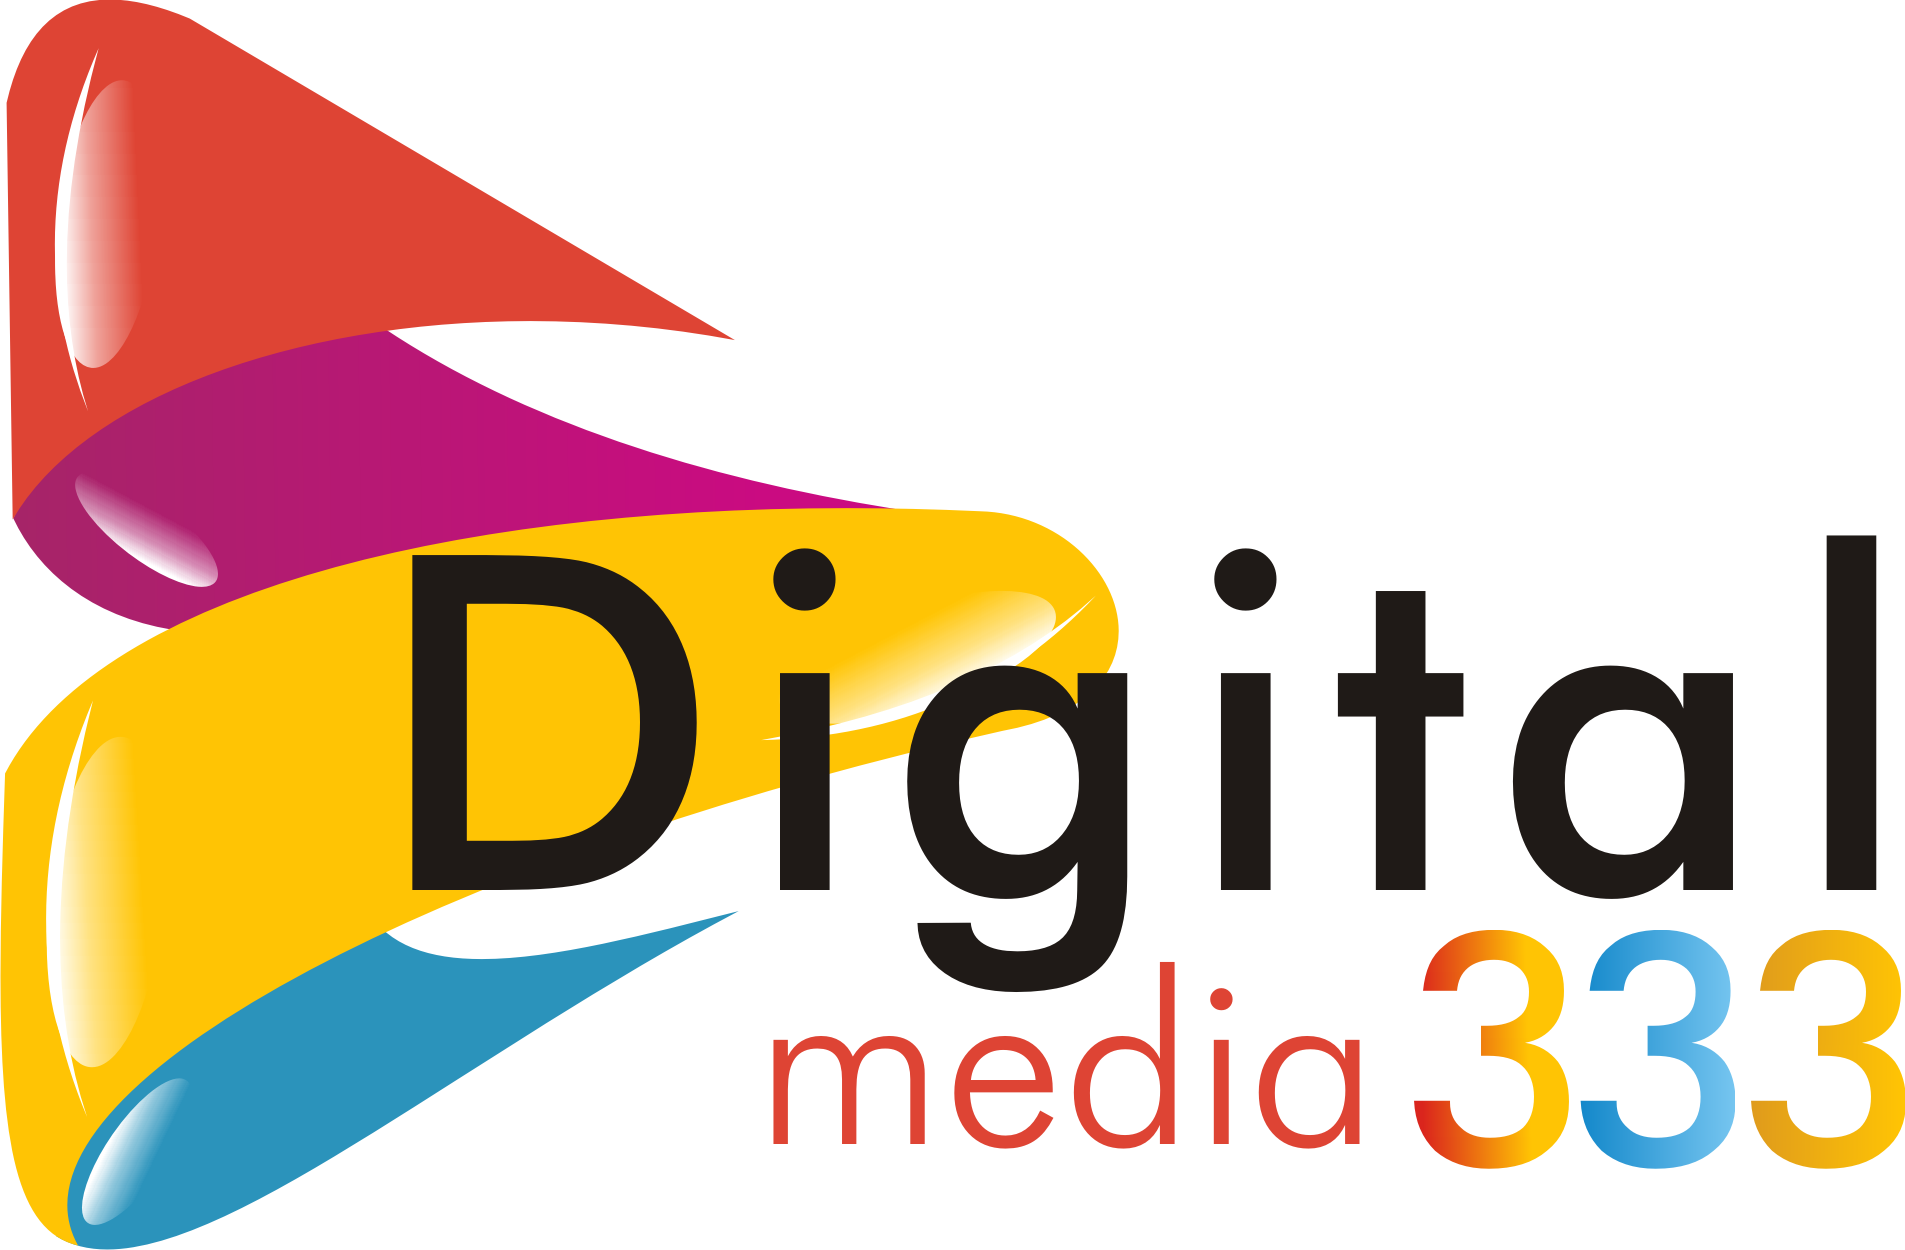 DM333 logo